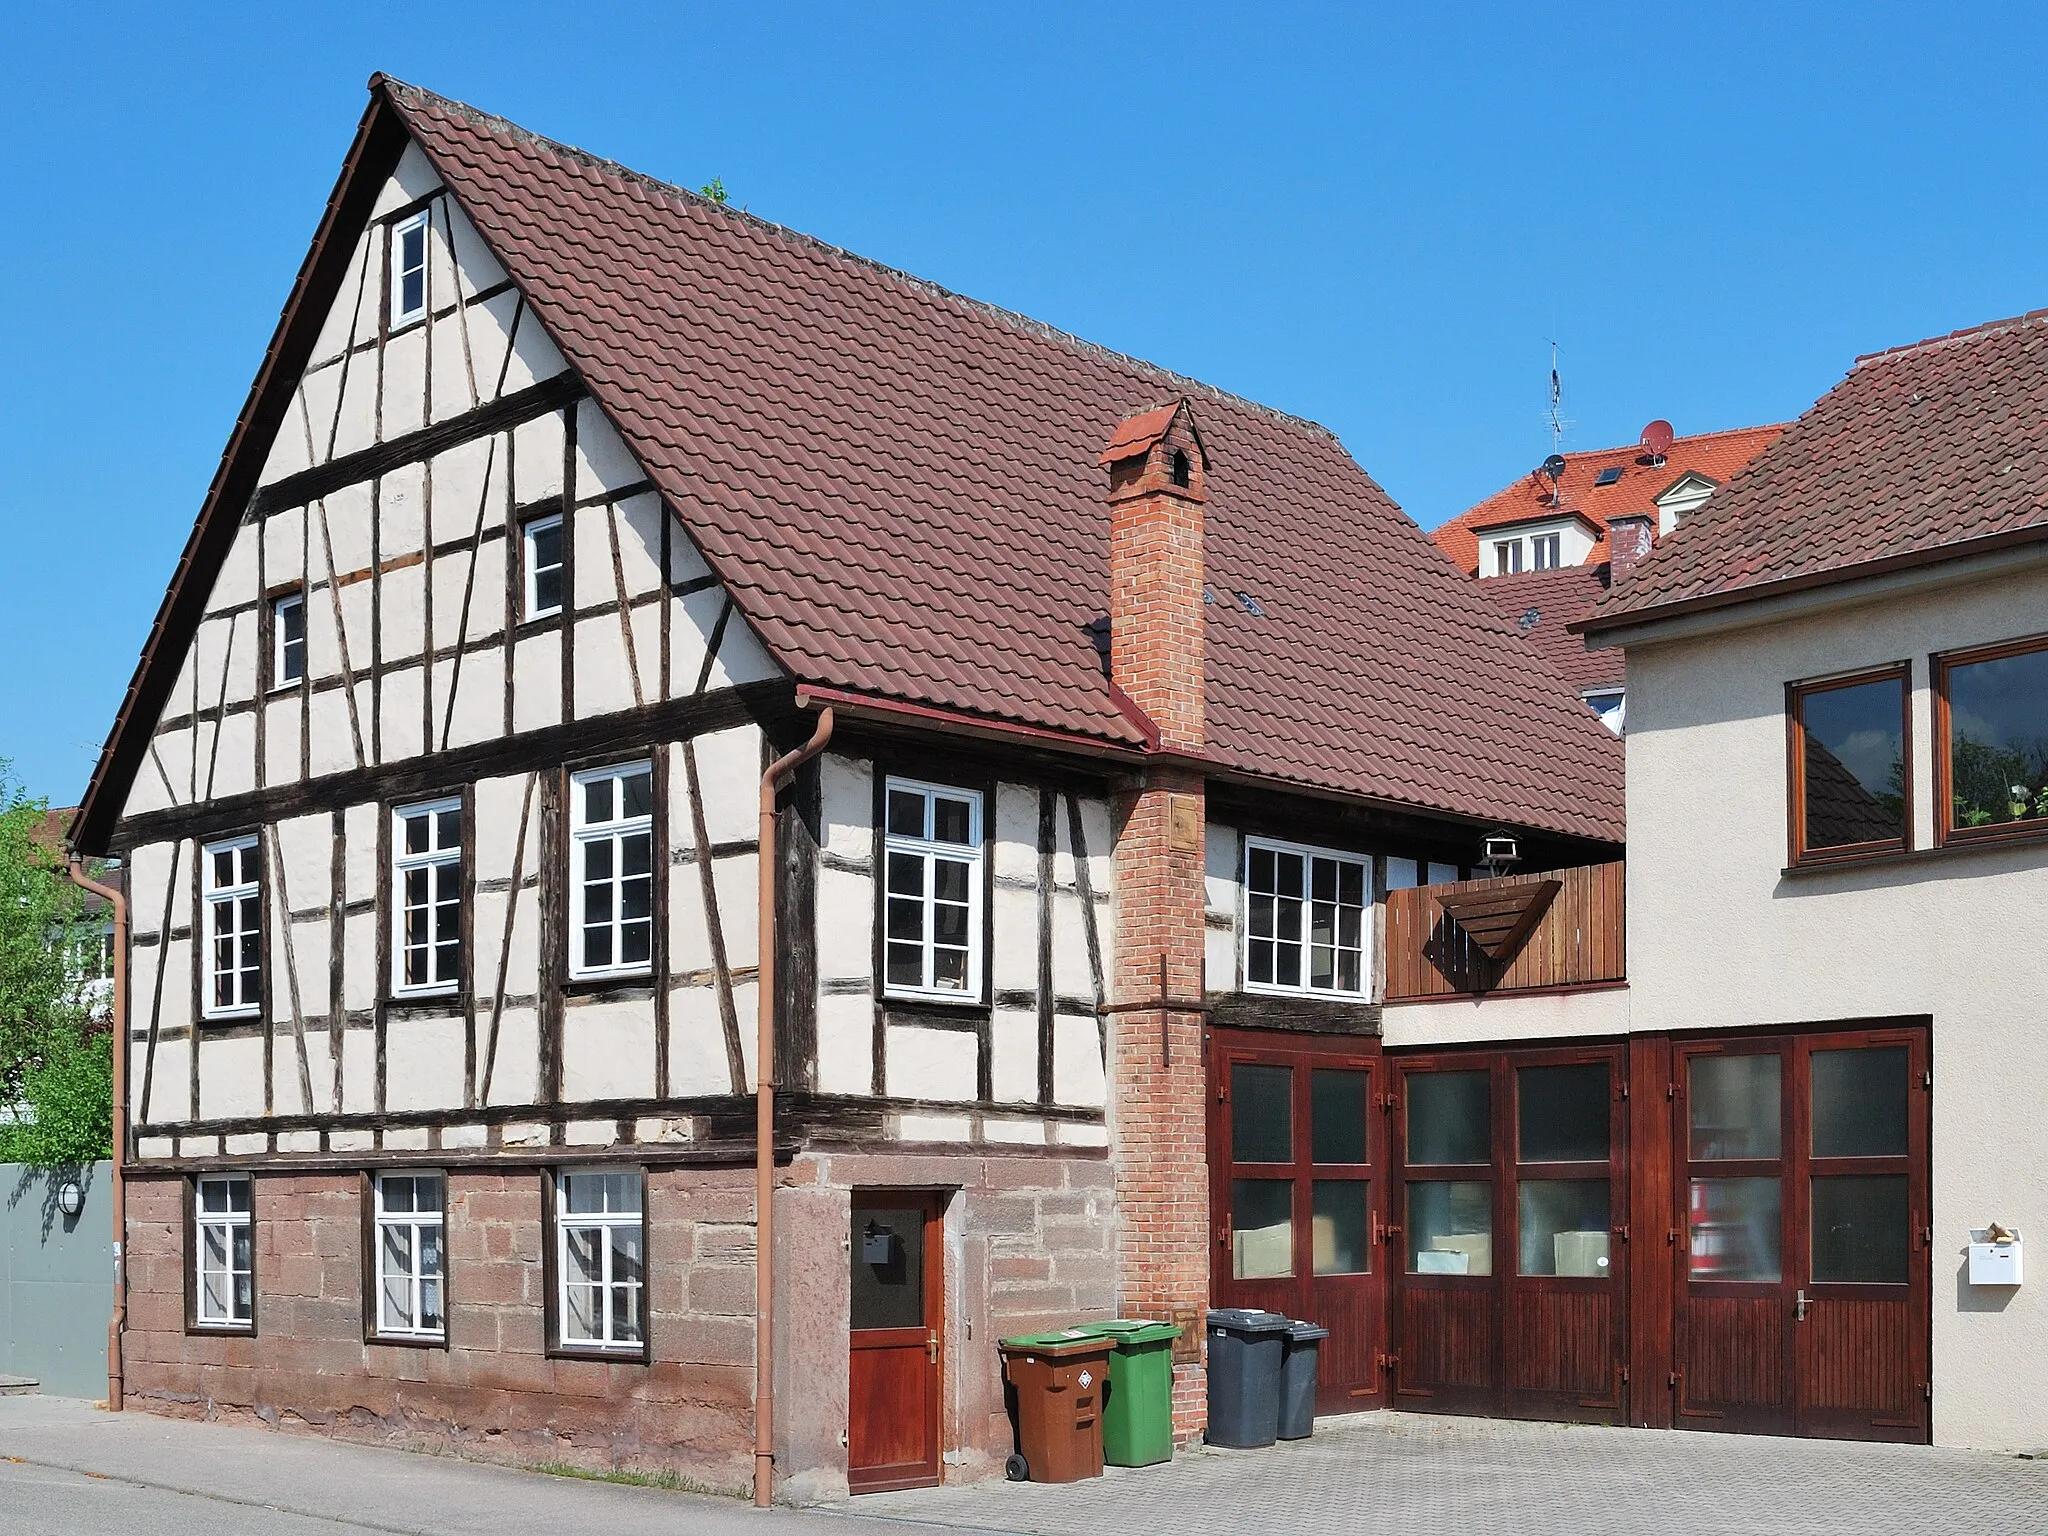 Photo showing: Timber framing in the Brunnenstraße in Korntal-Münchingen in Southern Germany.